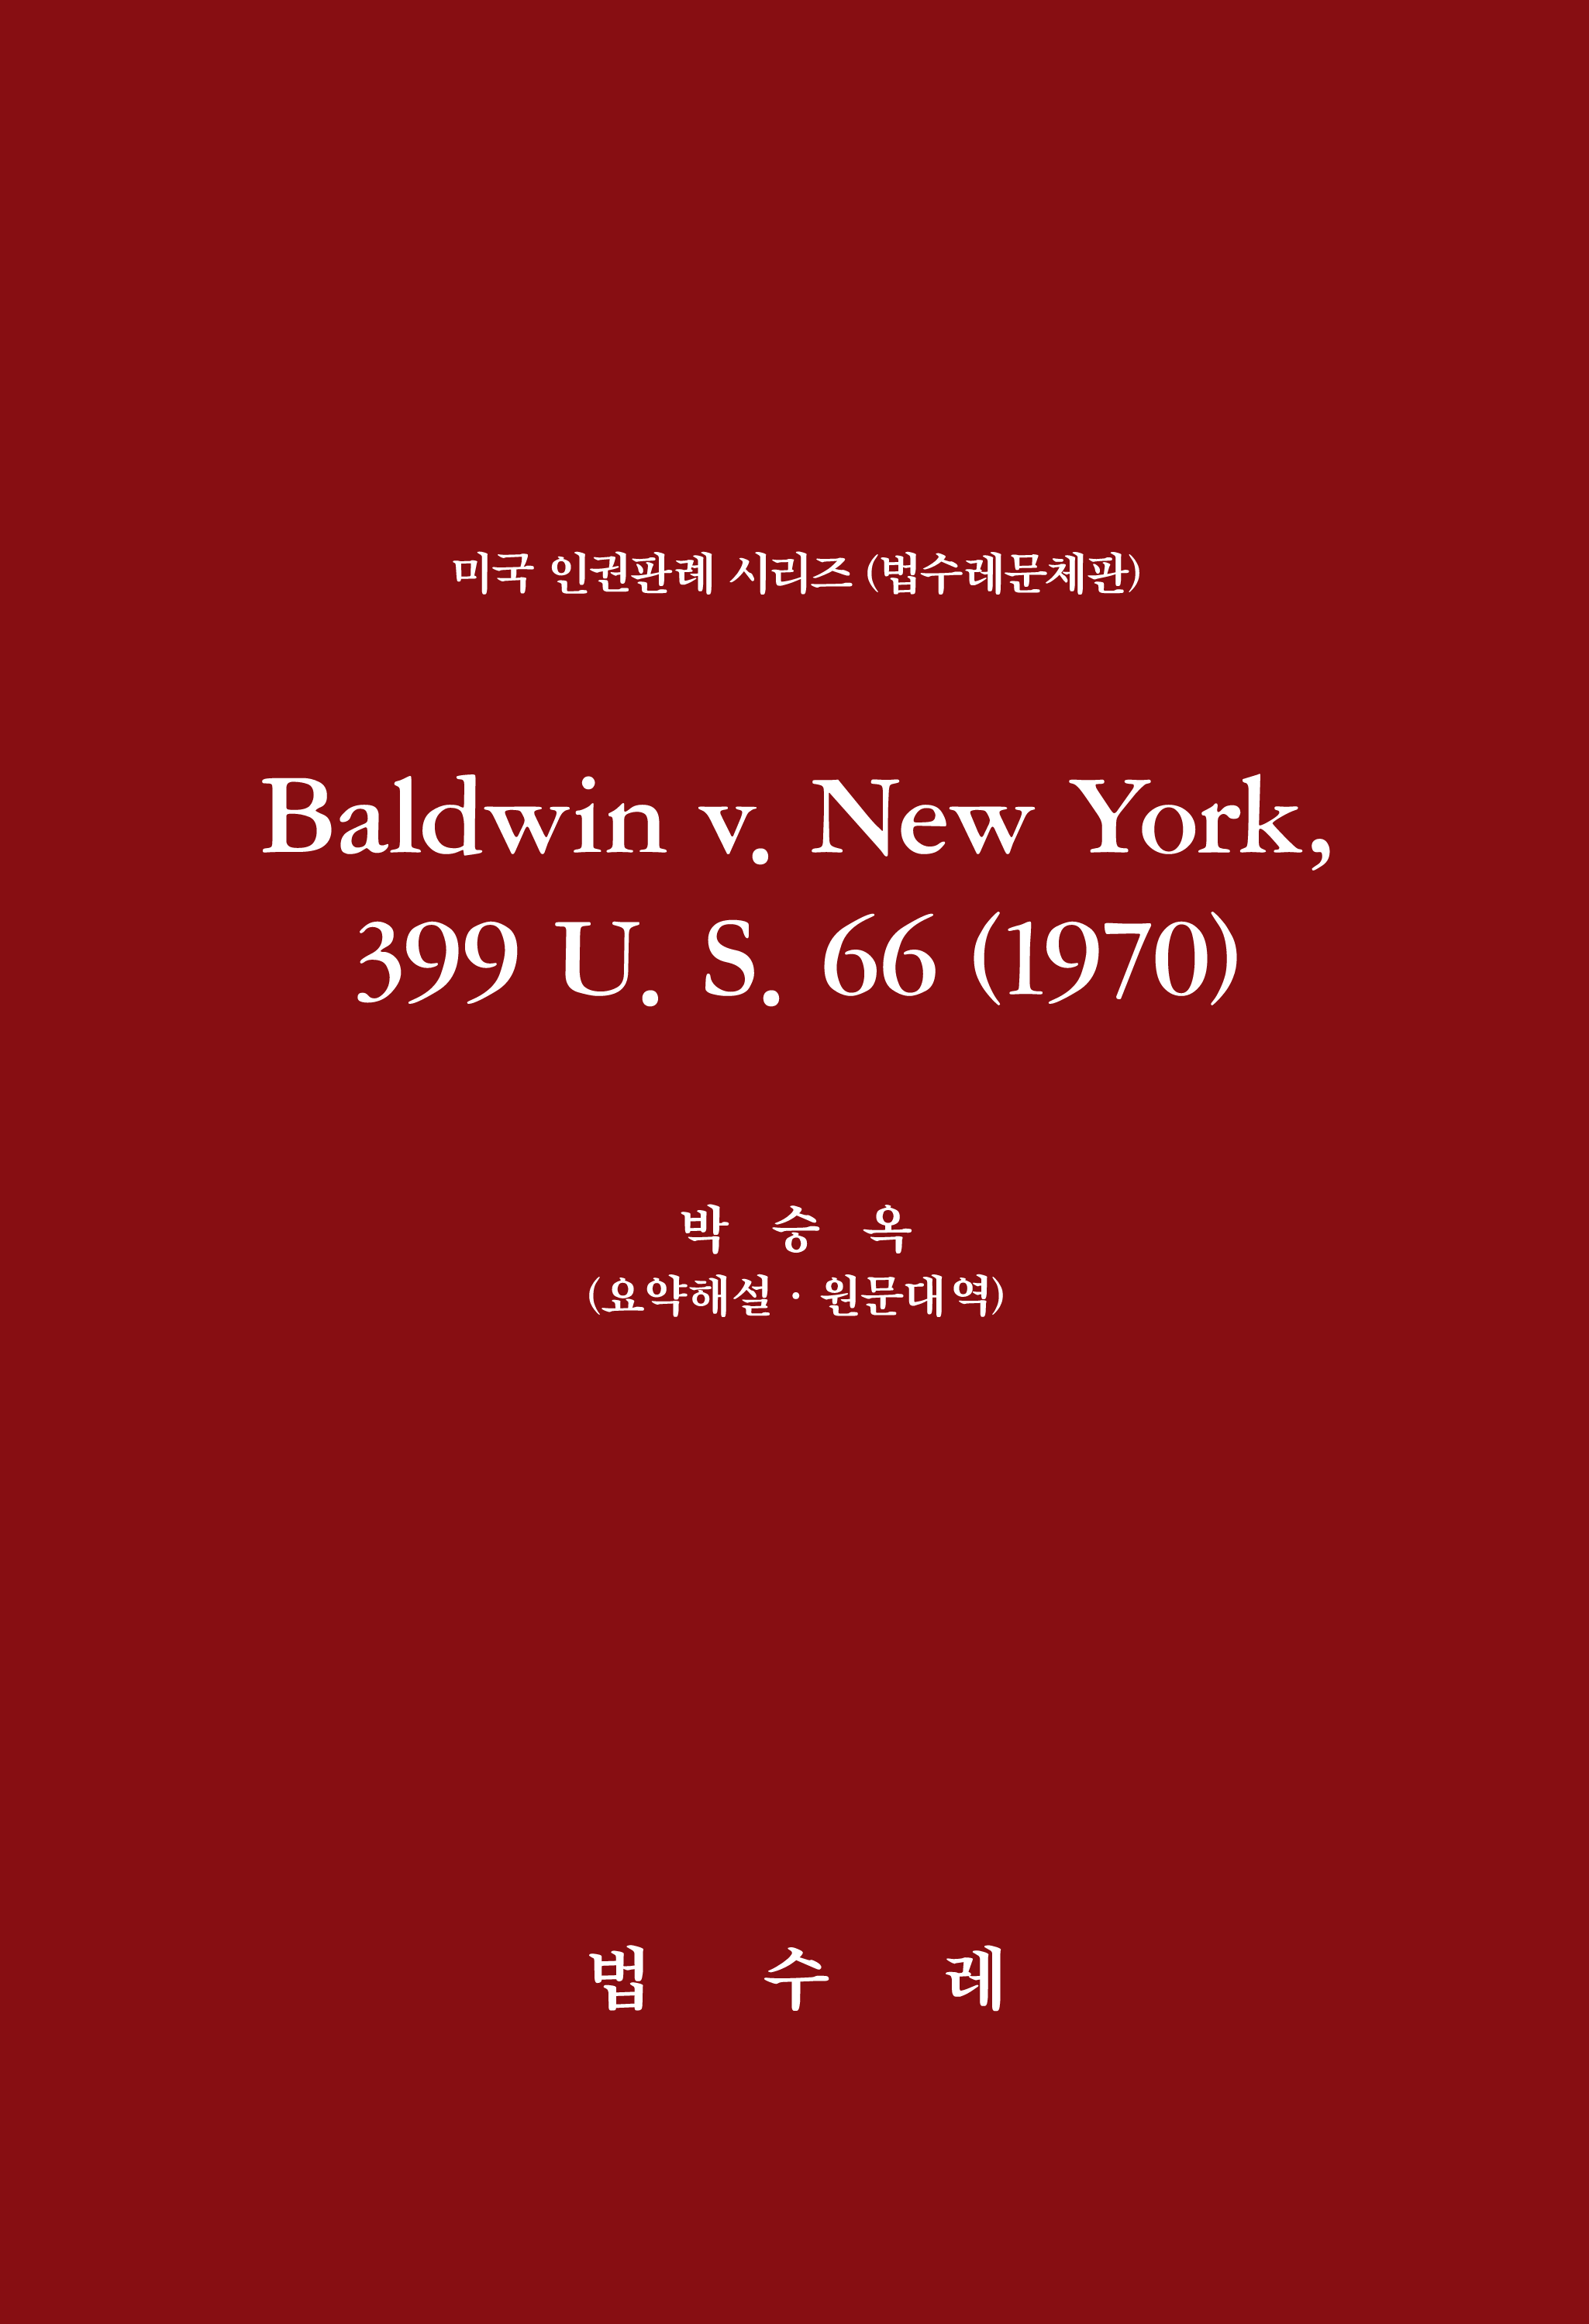 Baldwin v. New York, 399 U. S. 66 (1970)